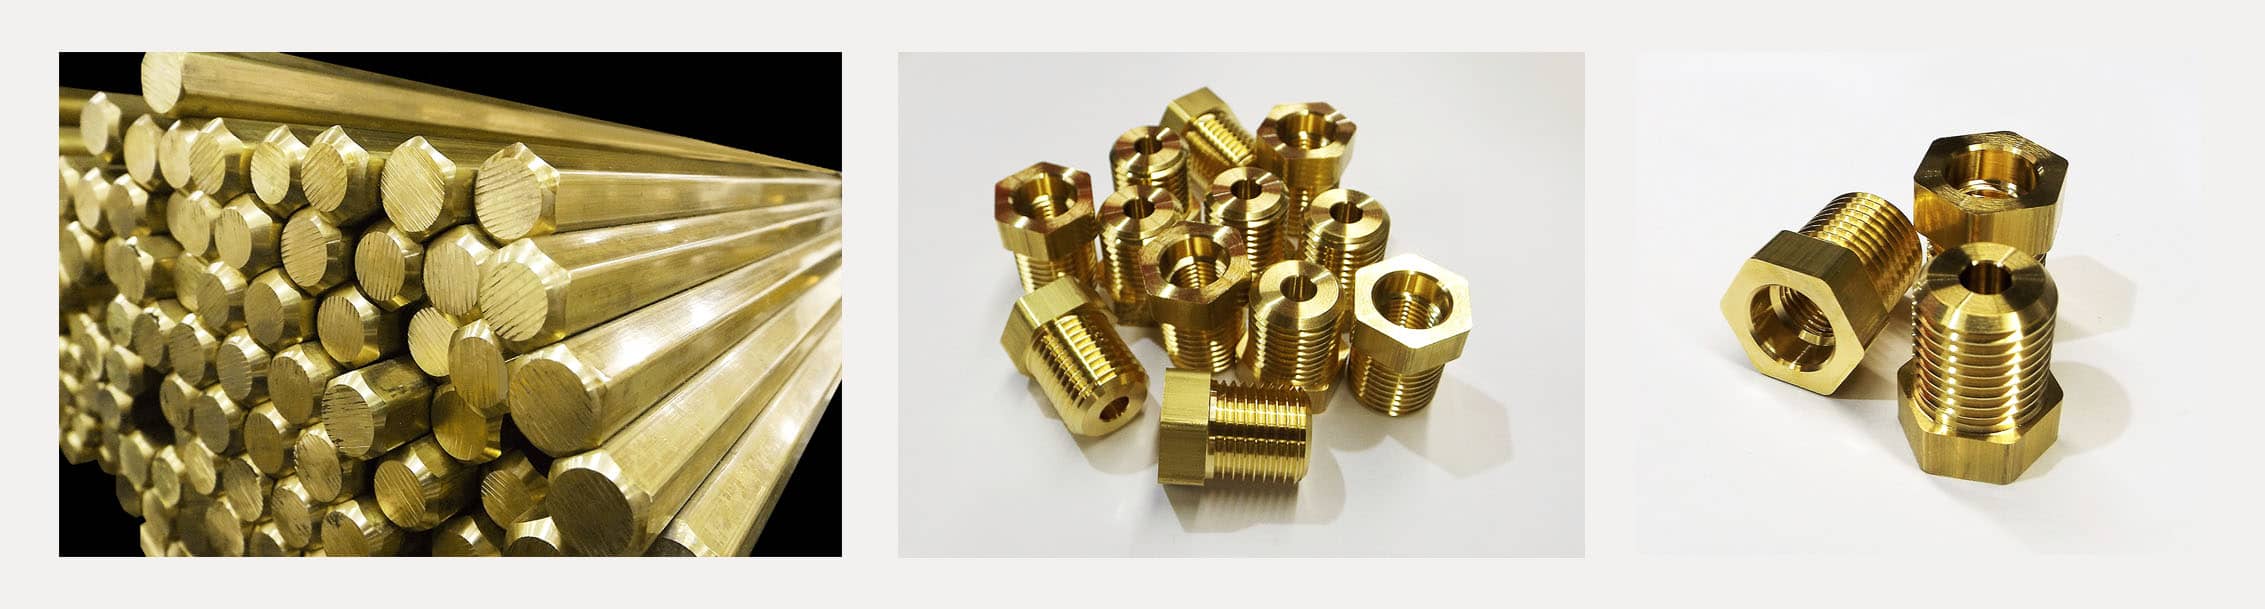 brass 360 machining